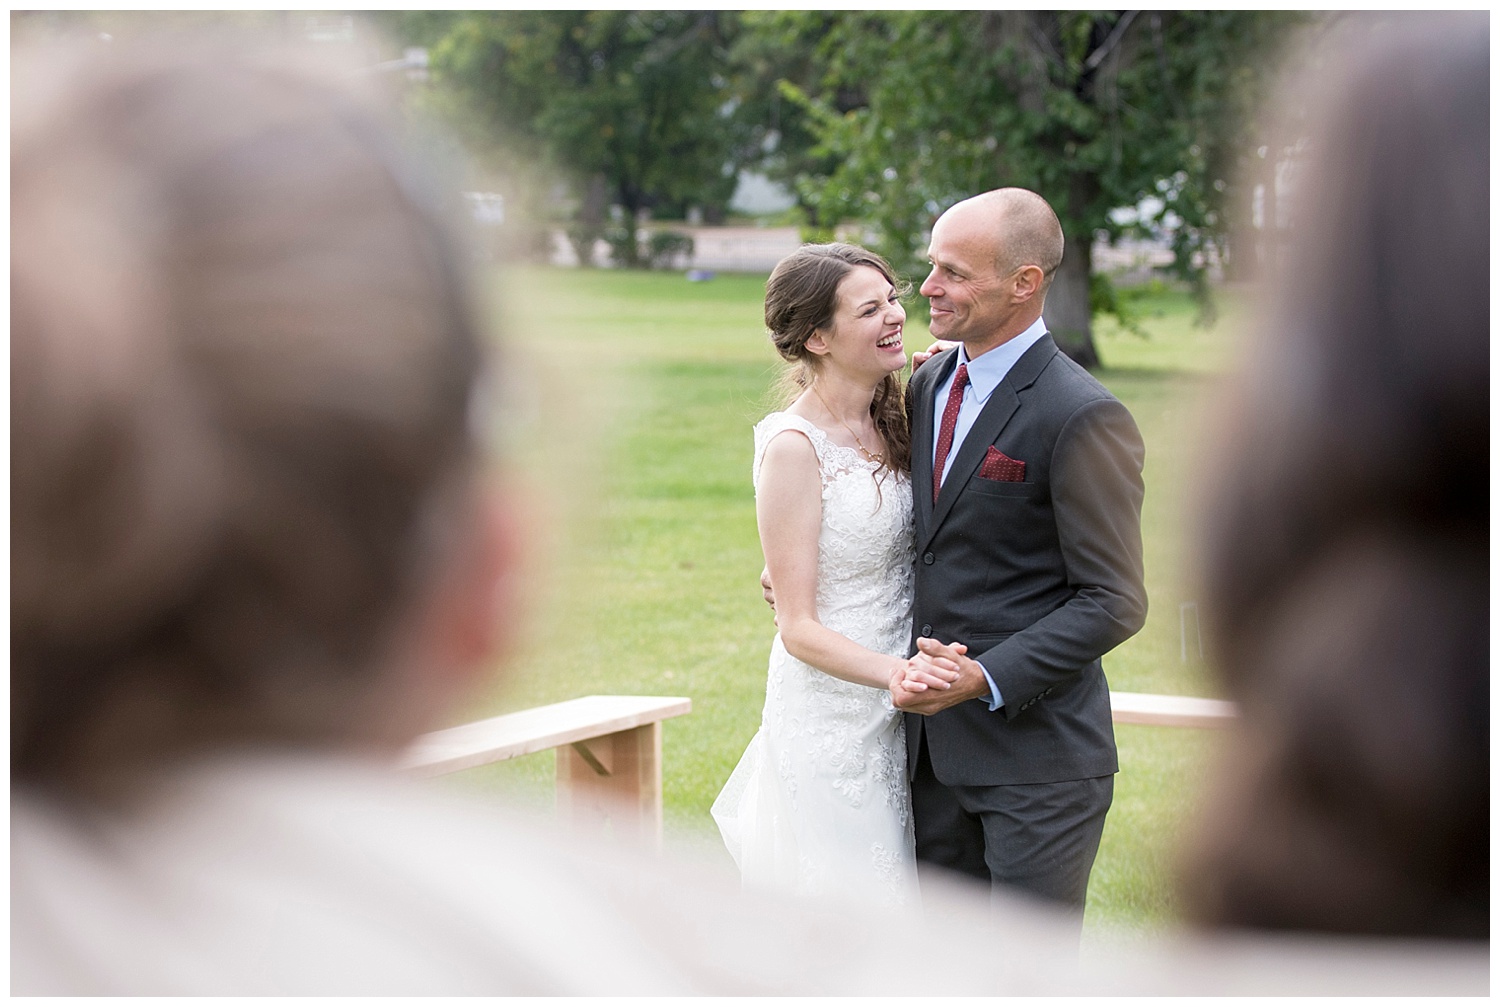 Daddy Daughter Dance | Bethany and Jono's Intimate DIY Wedding | Colorado Springs Wedding Photographer | Farm Wedding Photographer | Apollo Fields Wedding Photojournalism